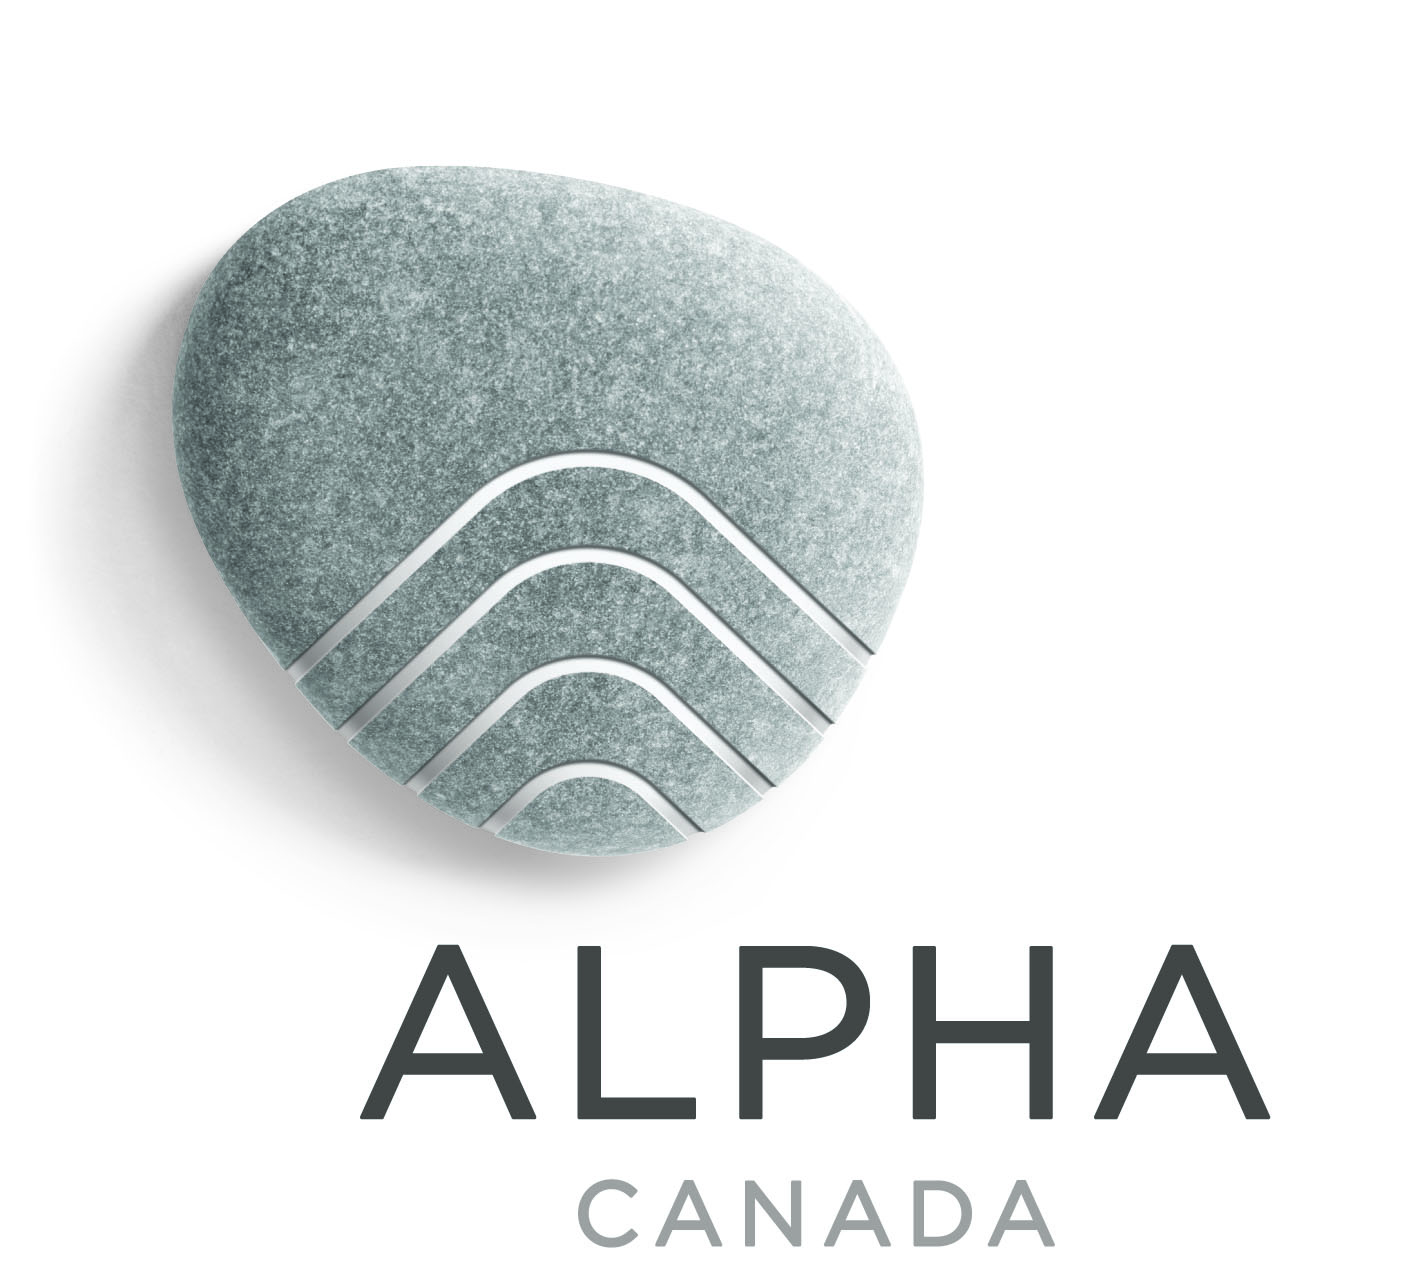 Логотип stone. Камень эмблема. Логотип натуральный камень. Искусственный камень логотип.